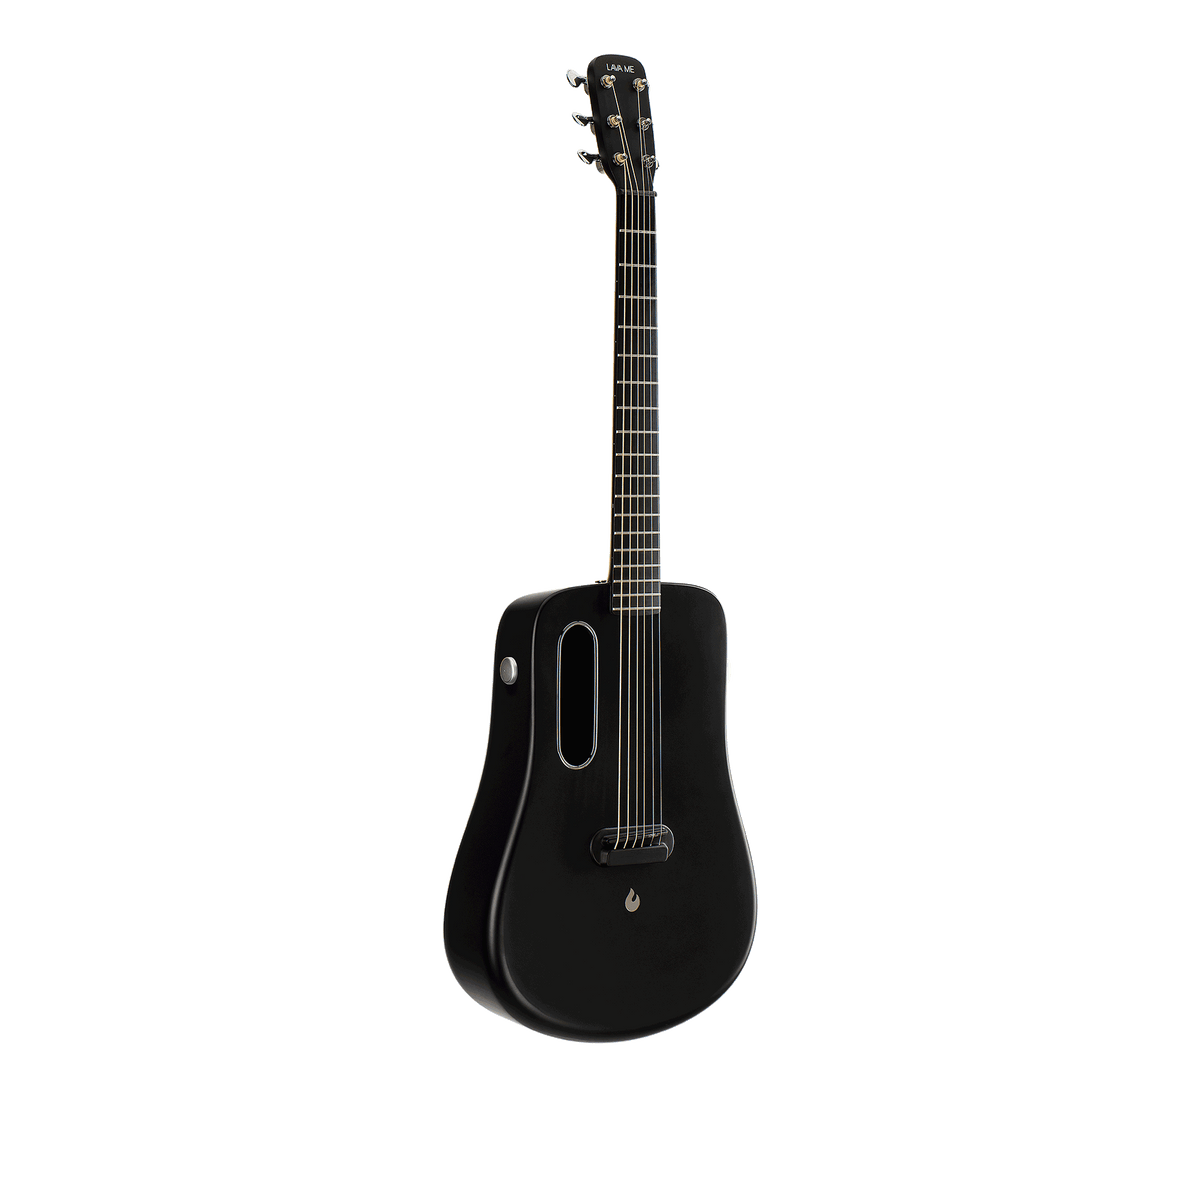 Đàn Guitar Acoustic Lava Me 2 EQ Black